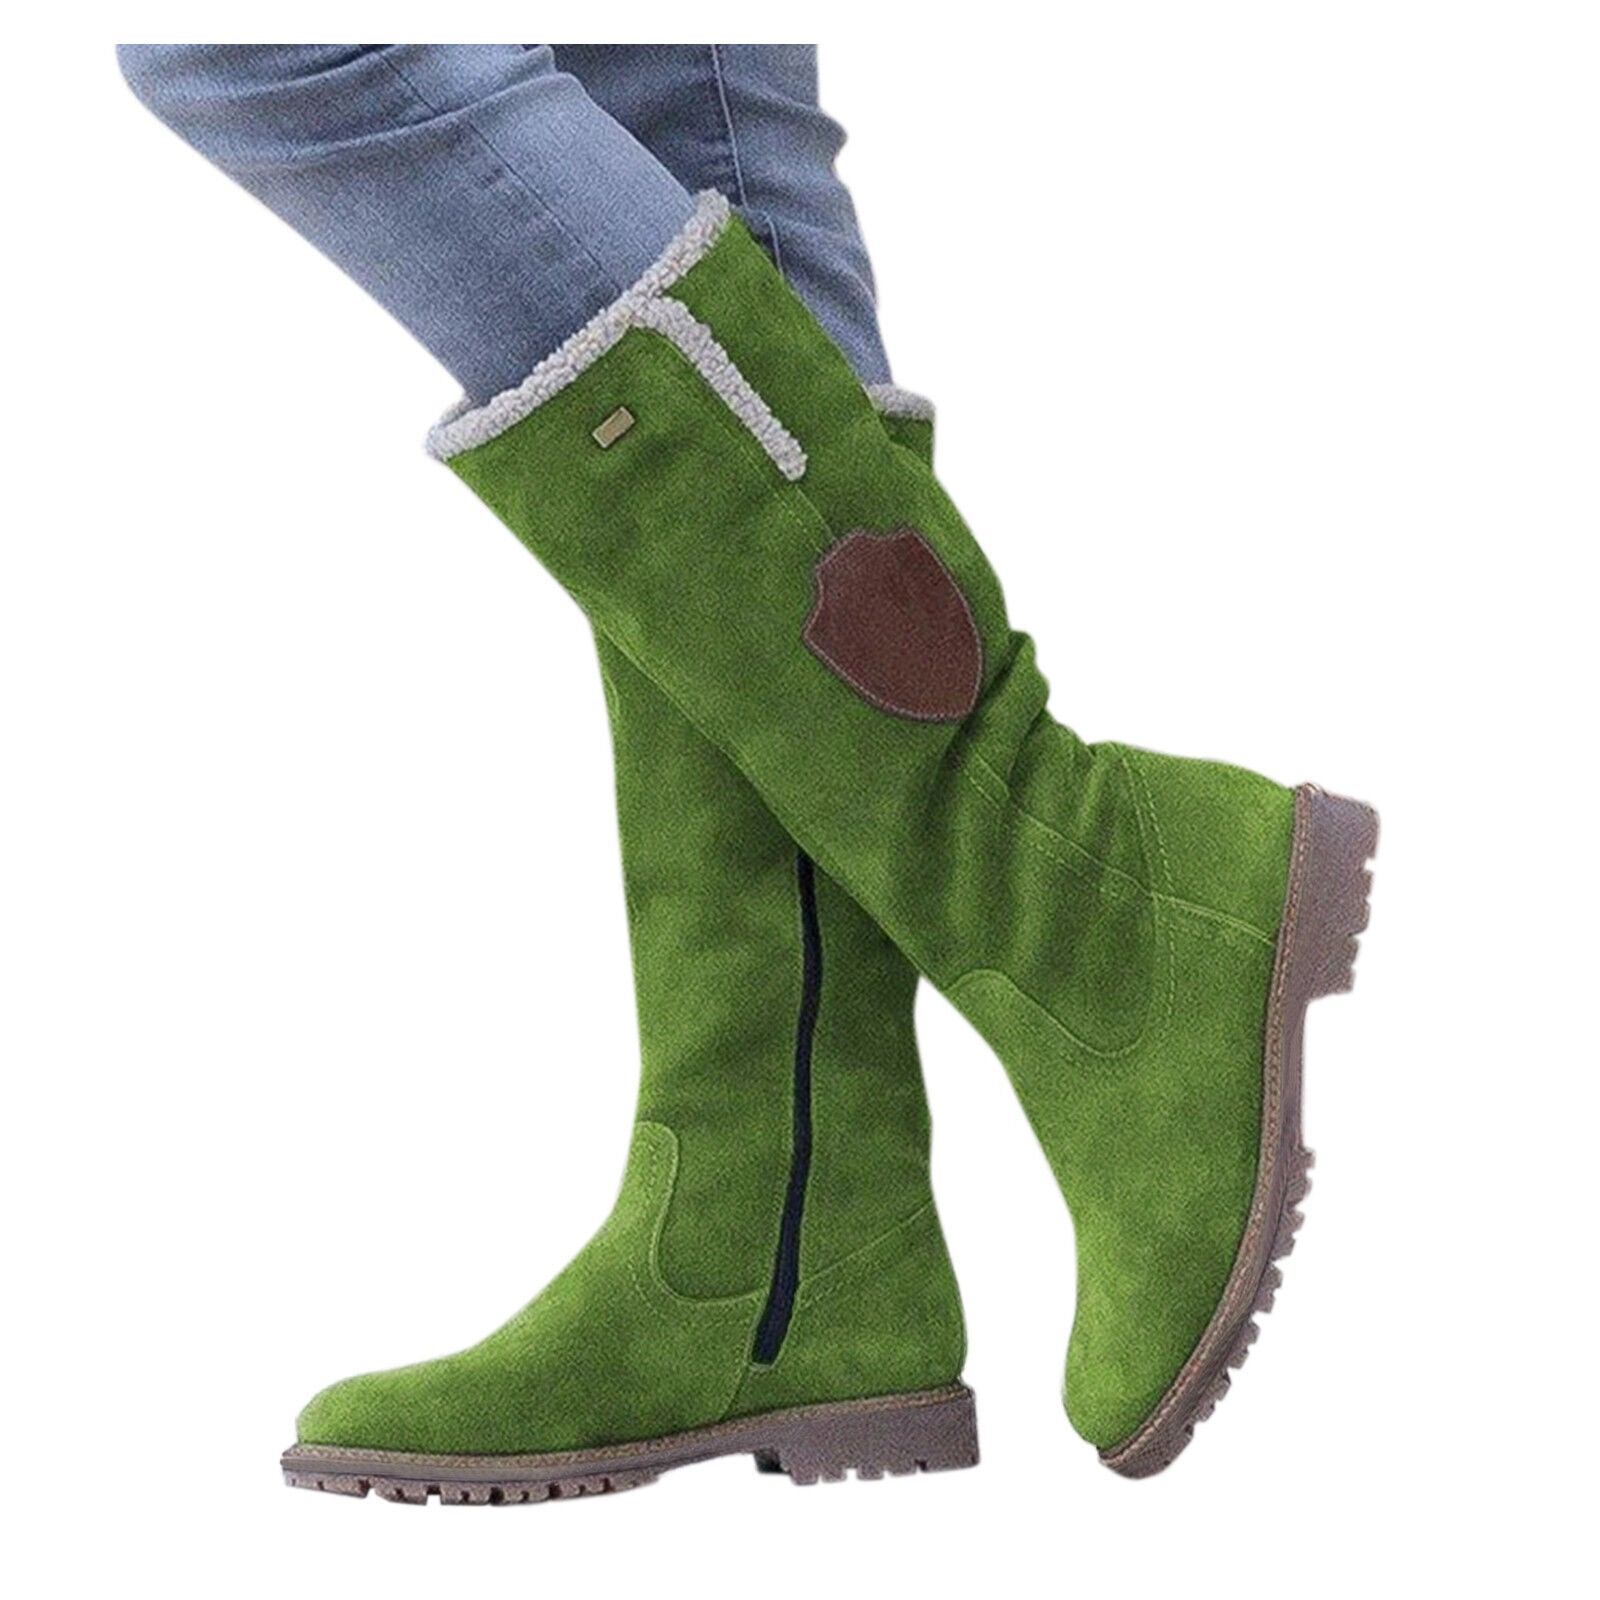 Angela Cross  Women Rain Boots Cotton Boots Snow Boots Shoes Long Knee High Winter Warm